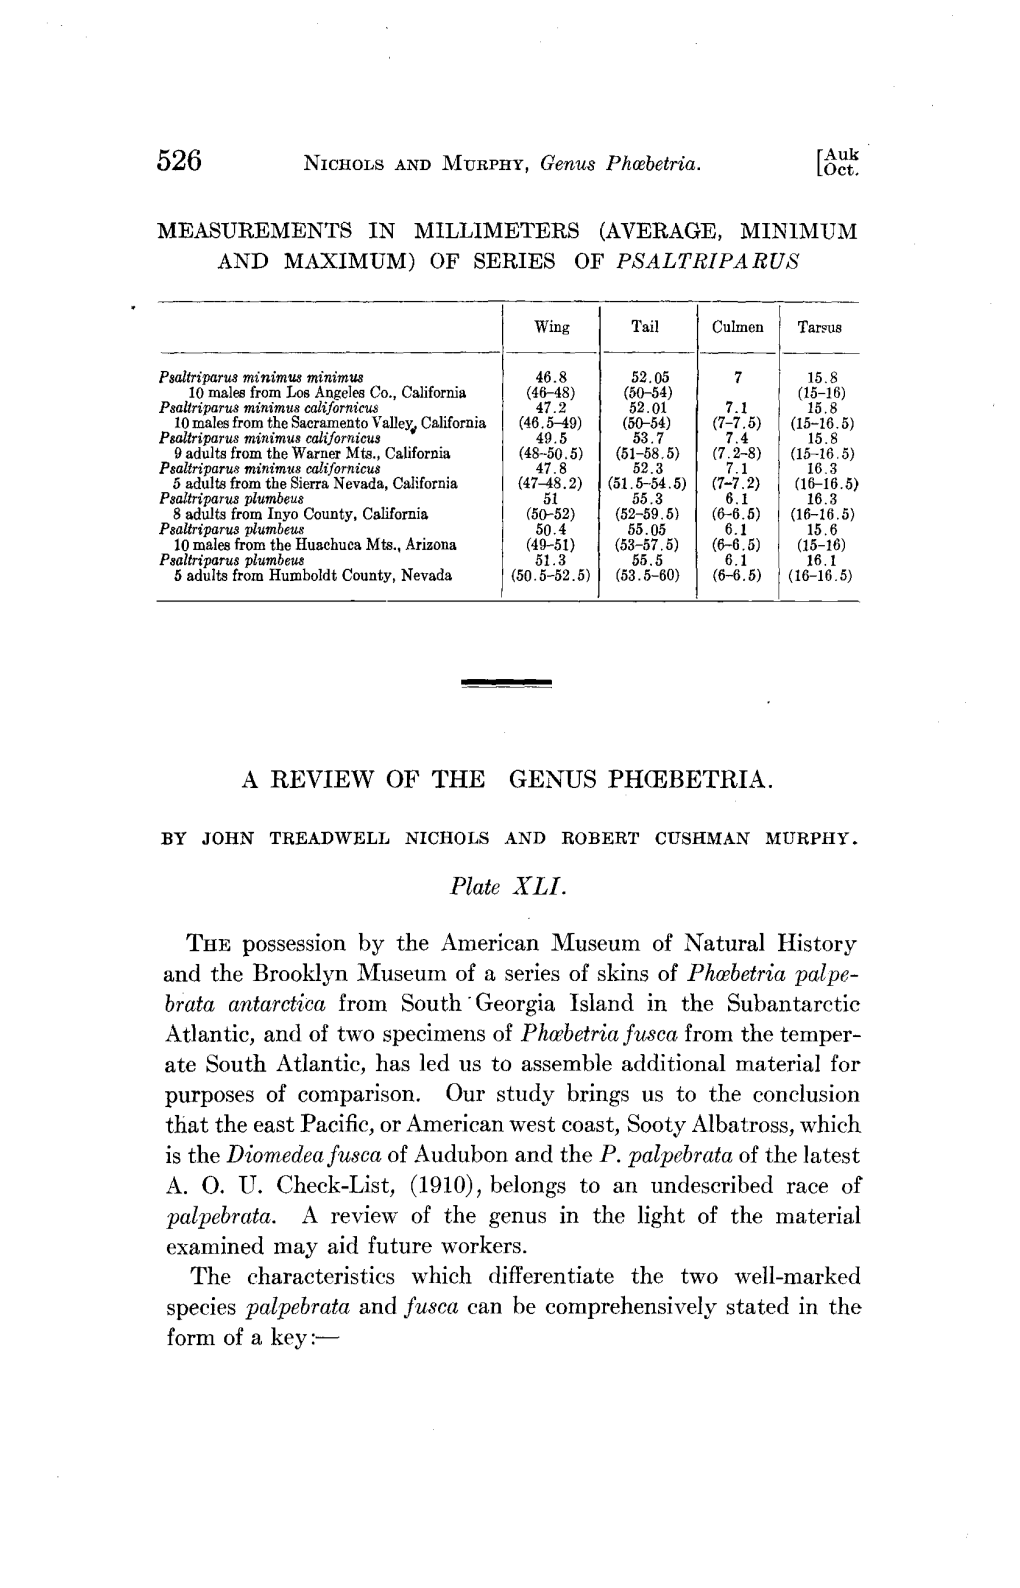 A Review of the Genus Ph[Oe]Betria